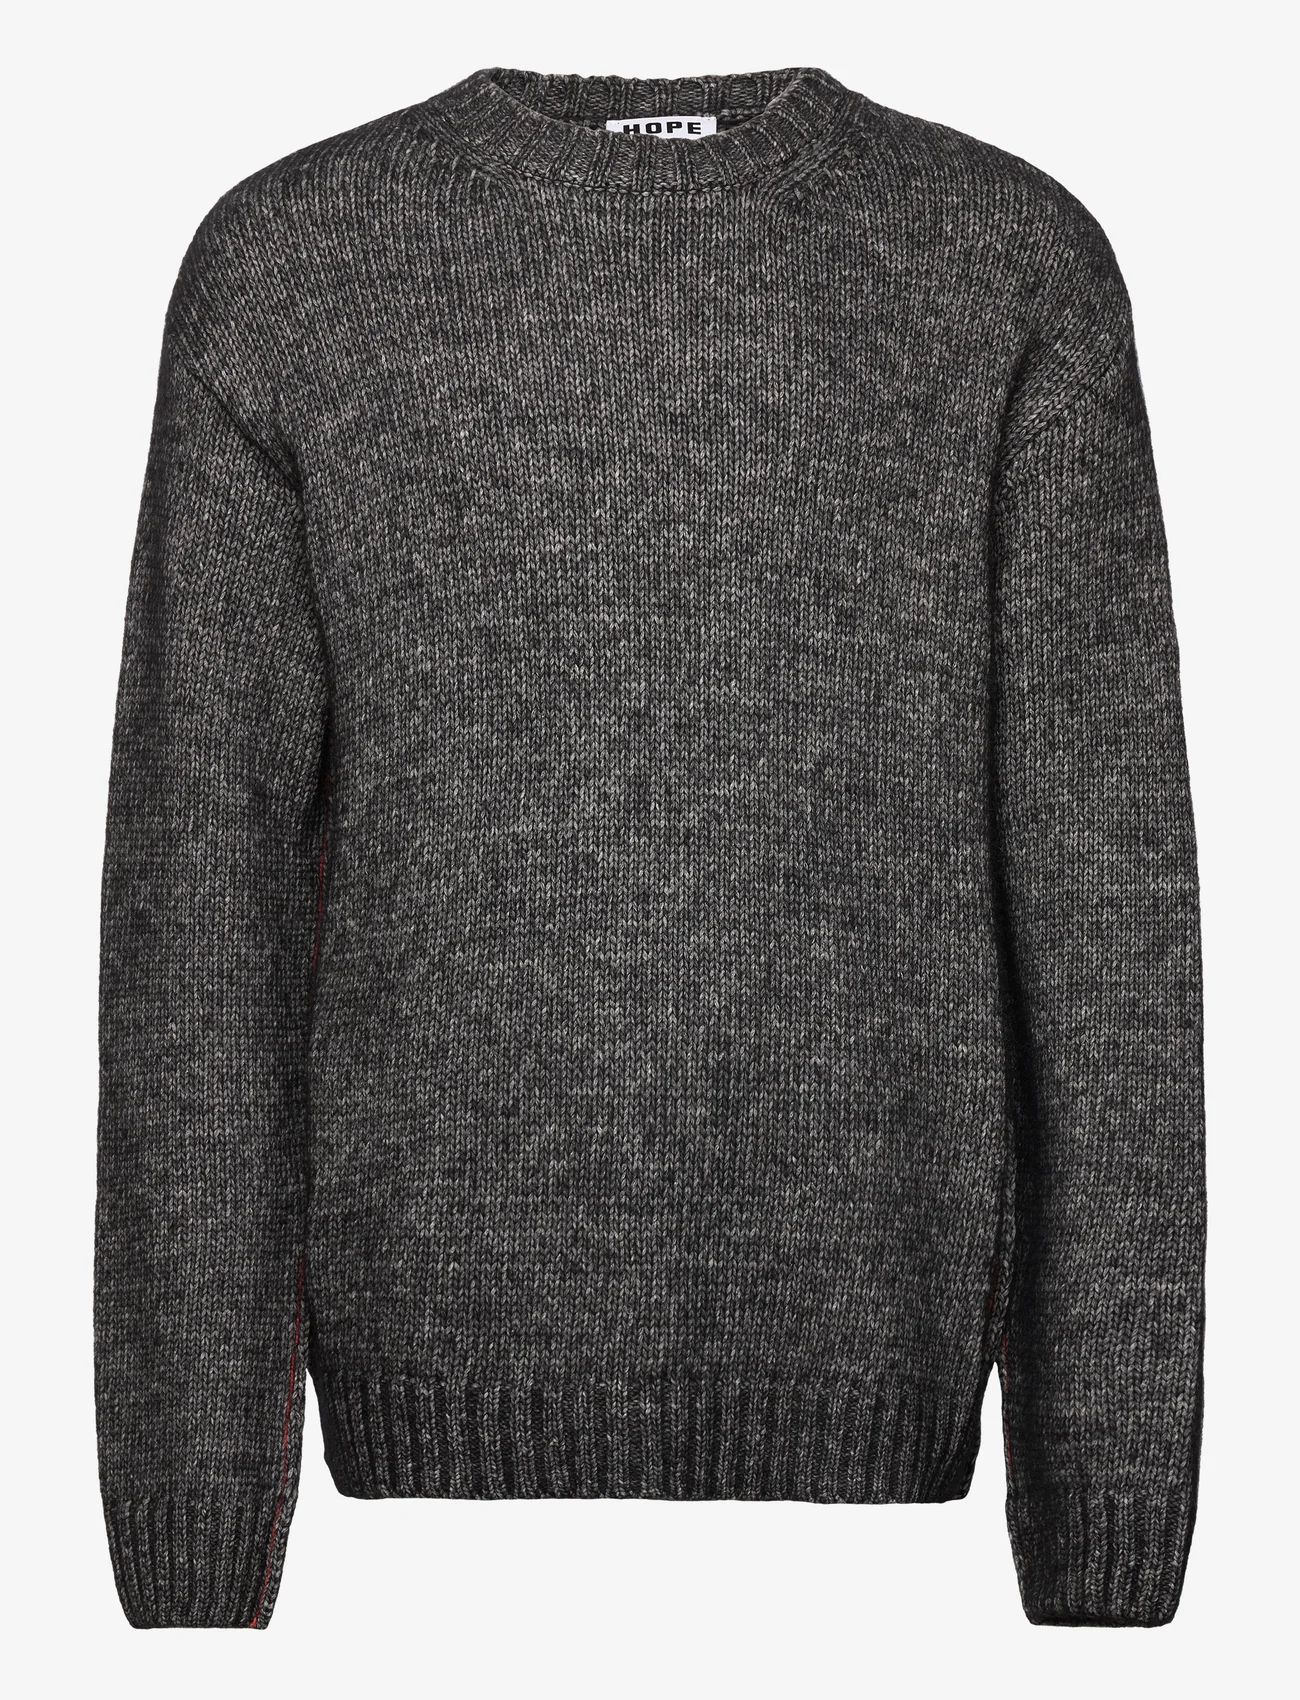 Hope - Oversized Wool Sweater - megztiniai su apvalios formos apykakle - black melange - 0